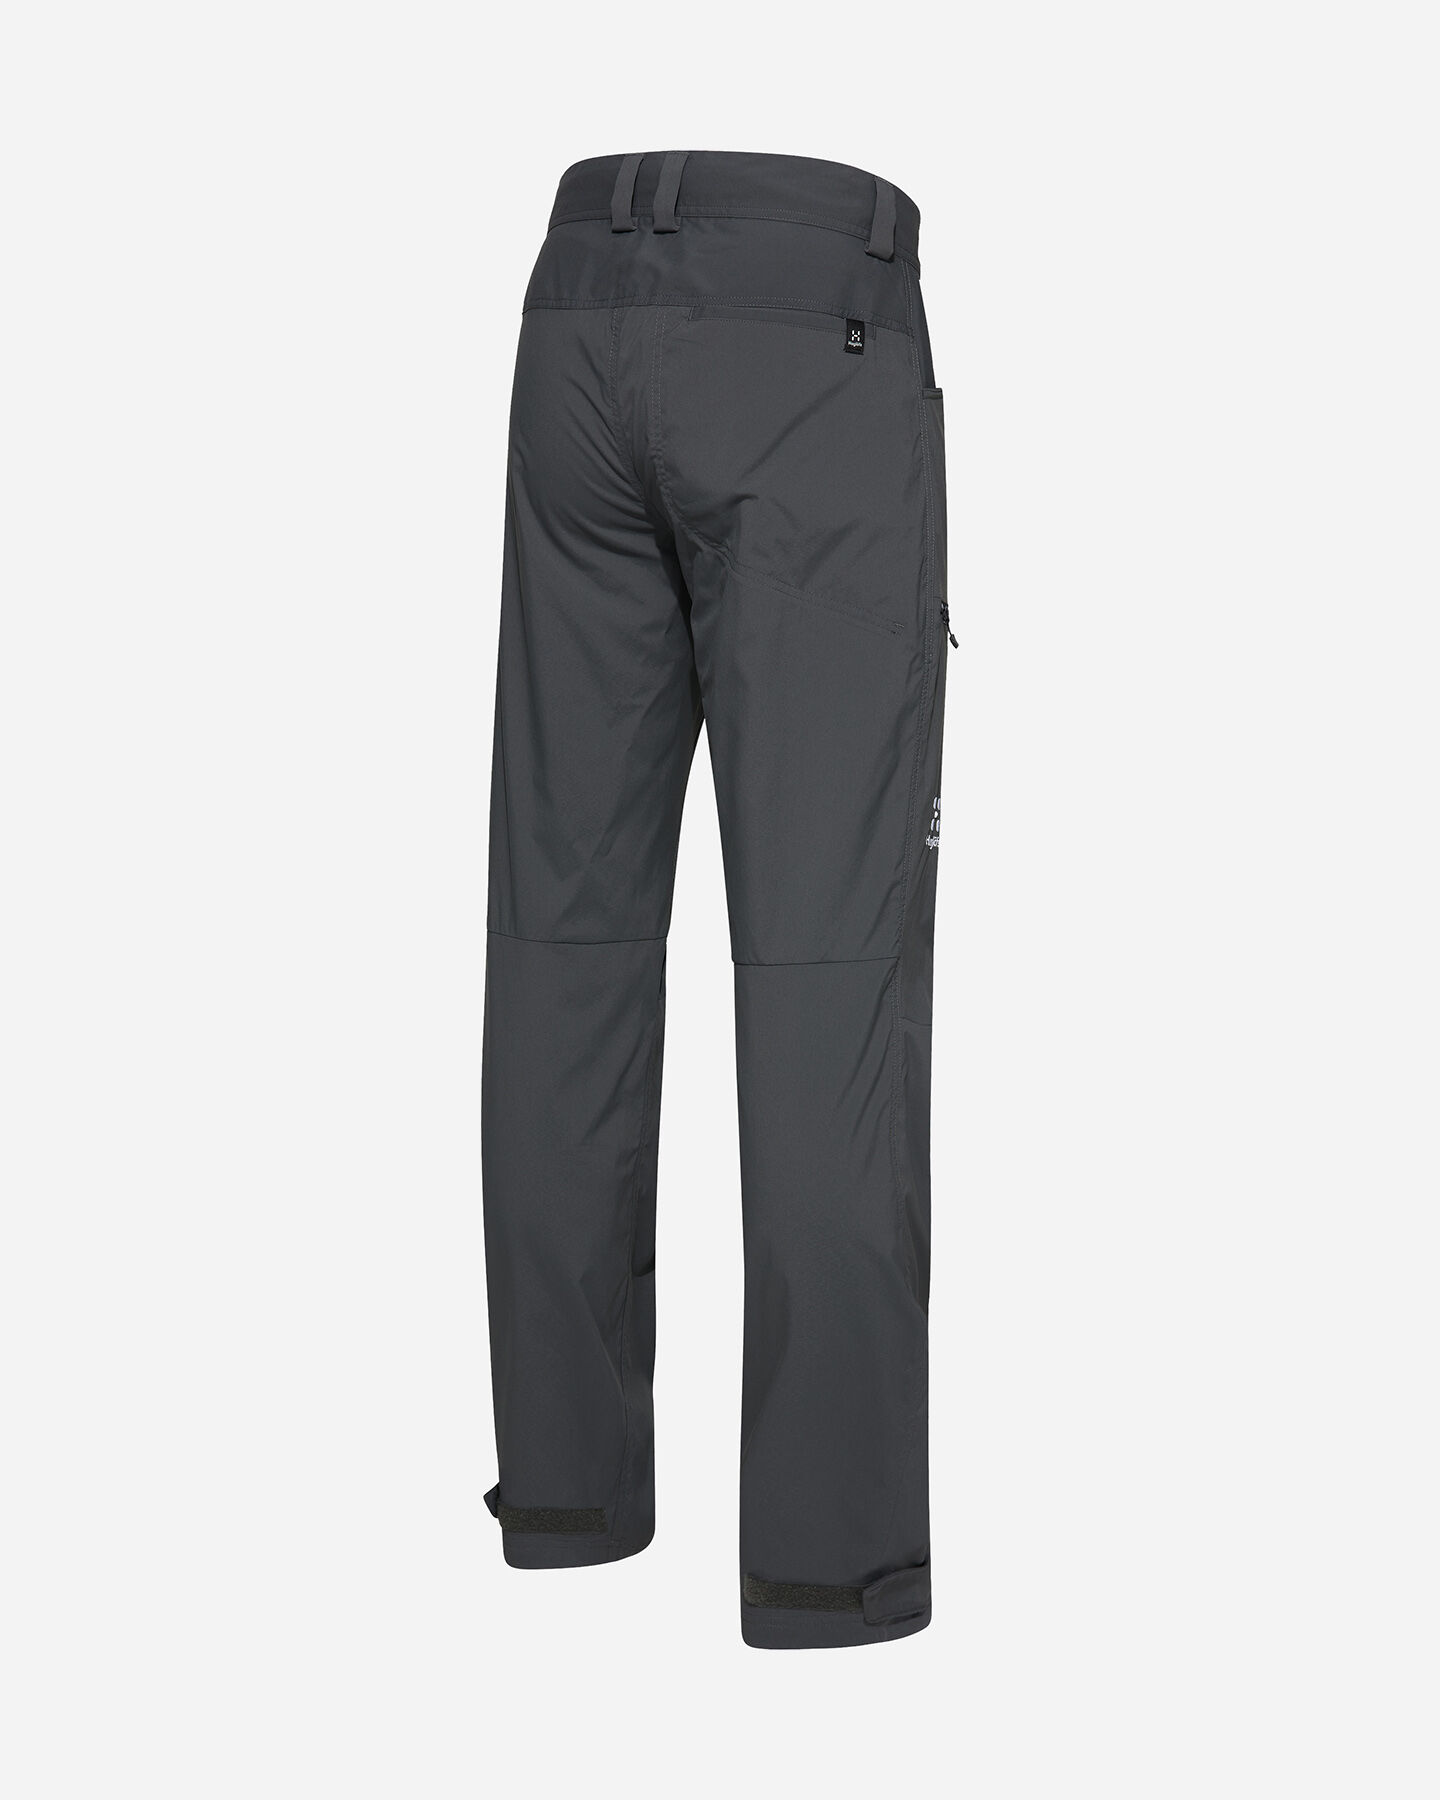  Pantalone outdoor HAGLOFS LITE STANDARD M S4105090|2AT|46 scatto 1